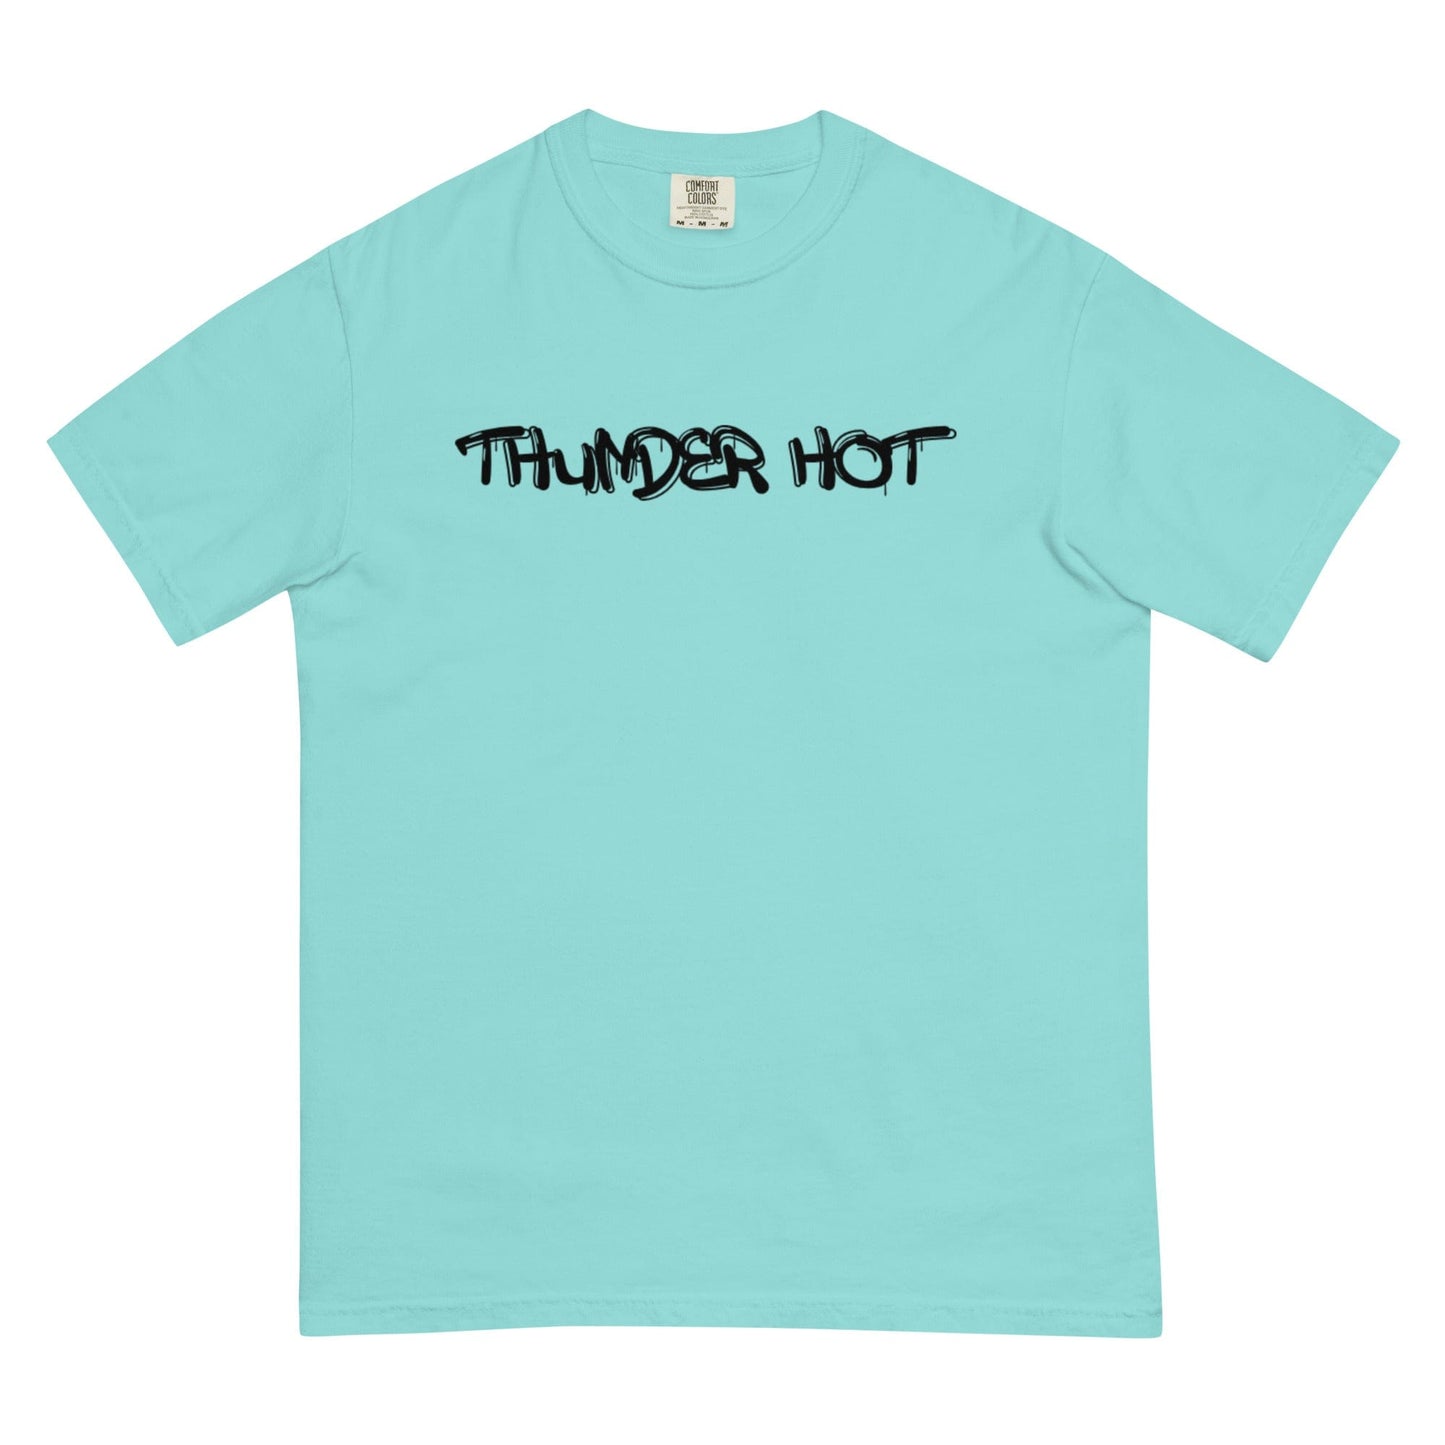 Thunder Hot Premium Graphic Tees Men and Women - Cool Shirts Design T-Shirts S - 4XL